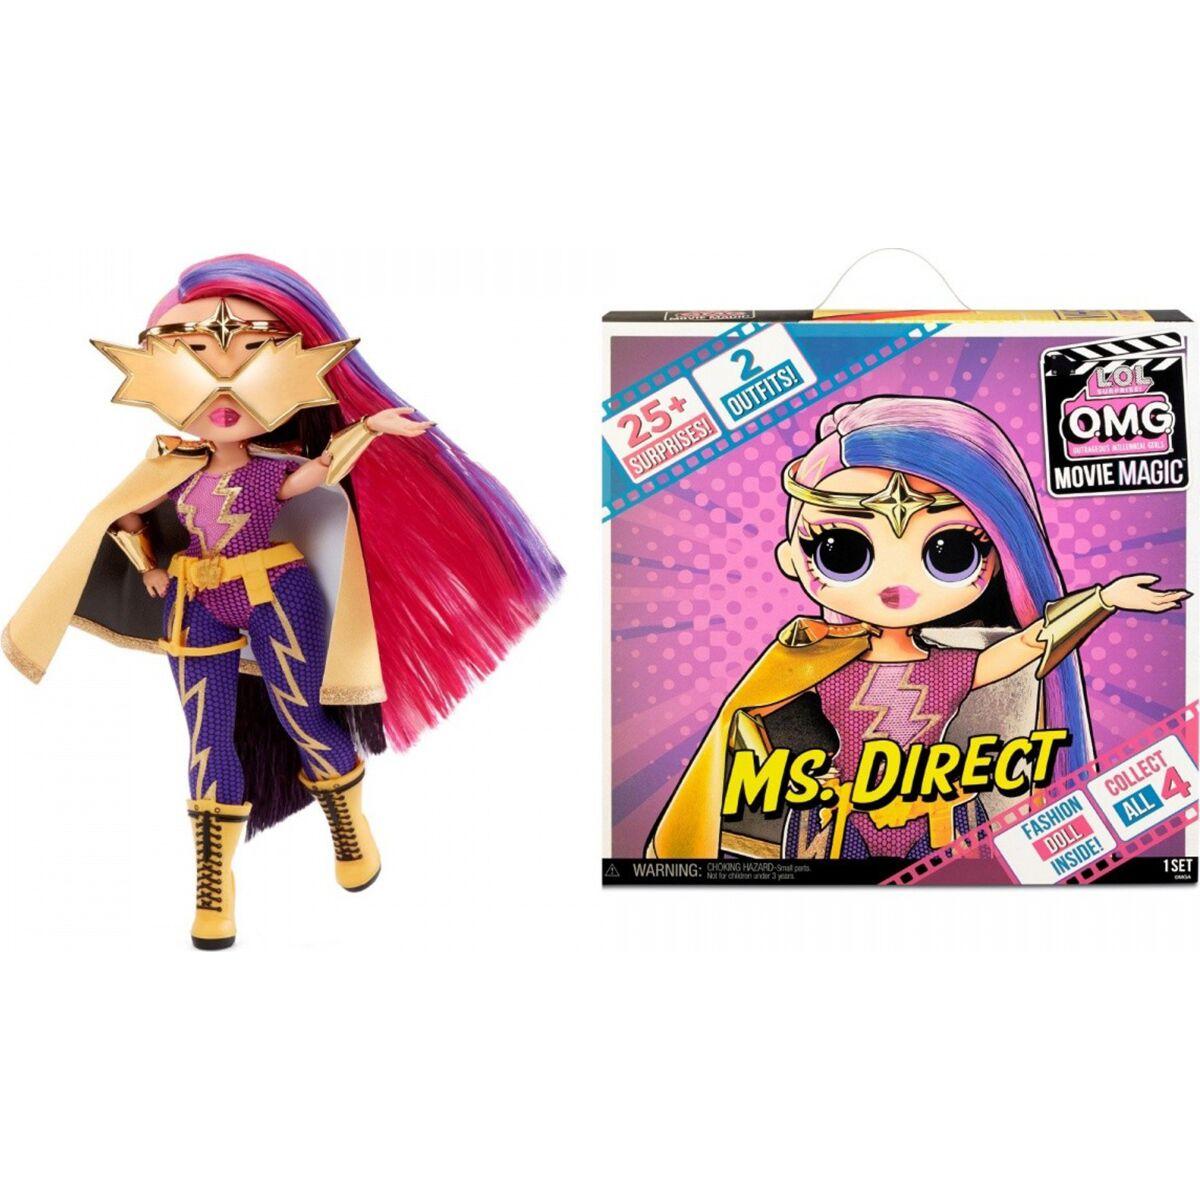 L.O.L.: Surprise Кукла OMG Movie Magic Doll- Ms. Direct